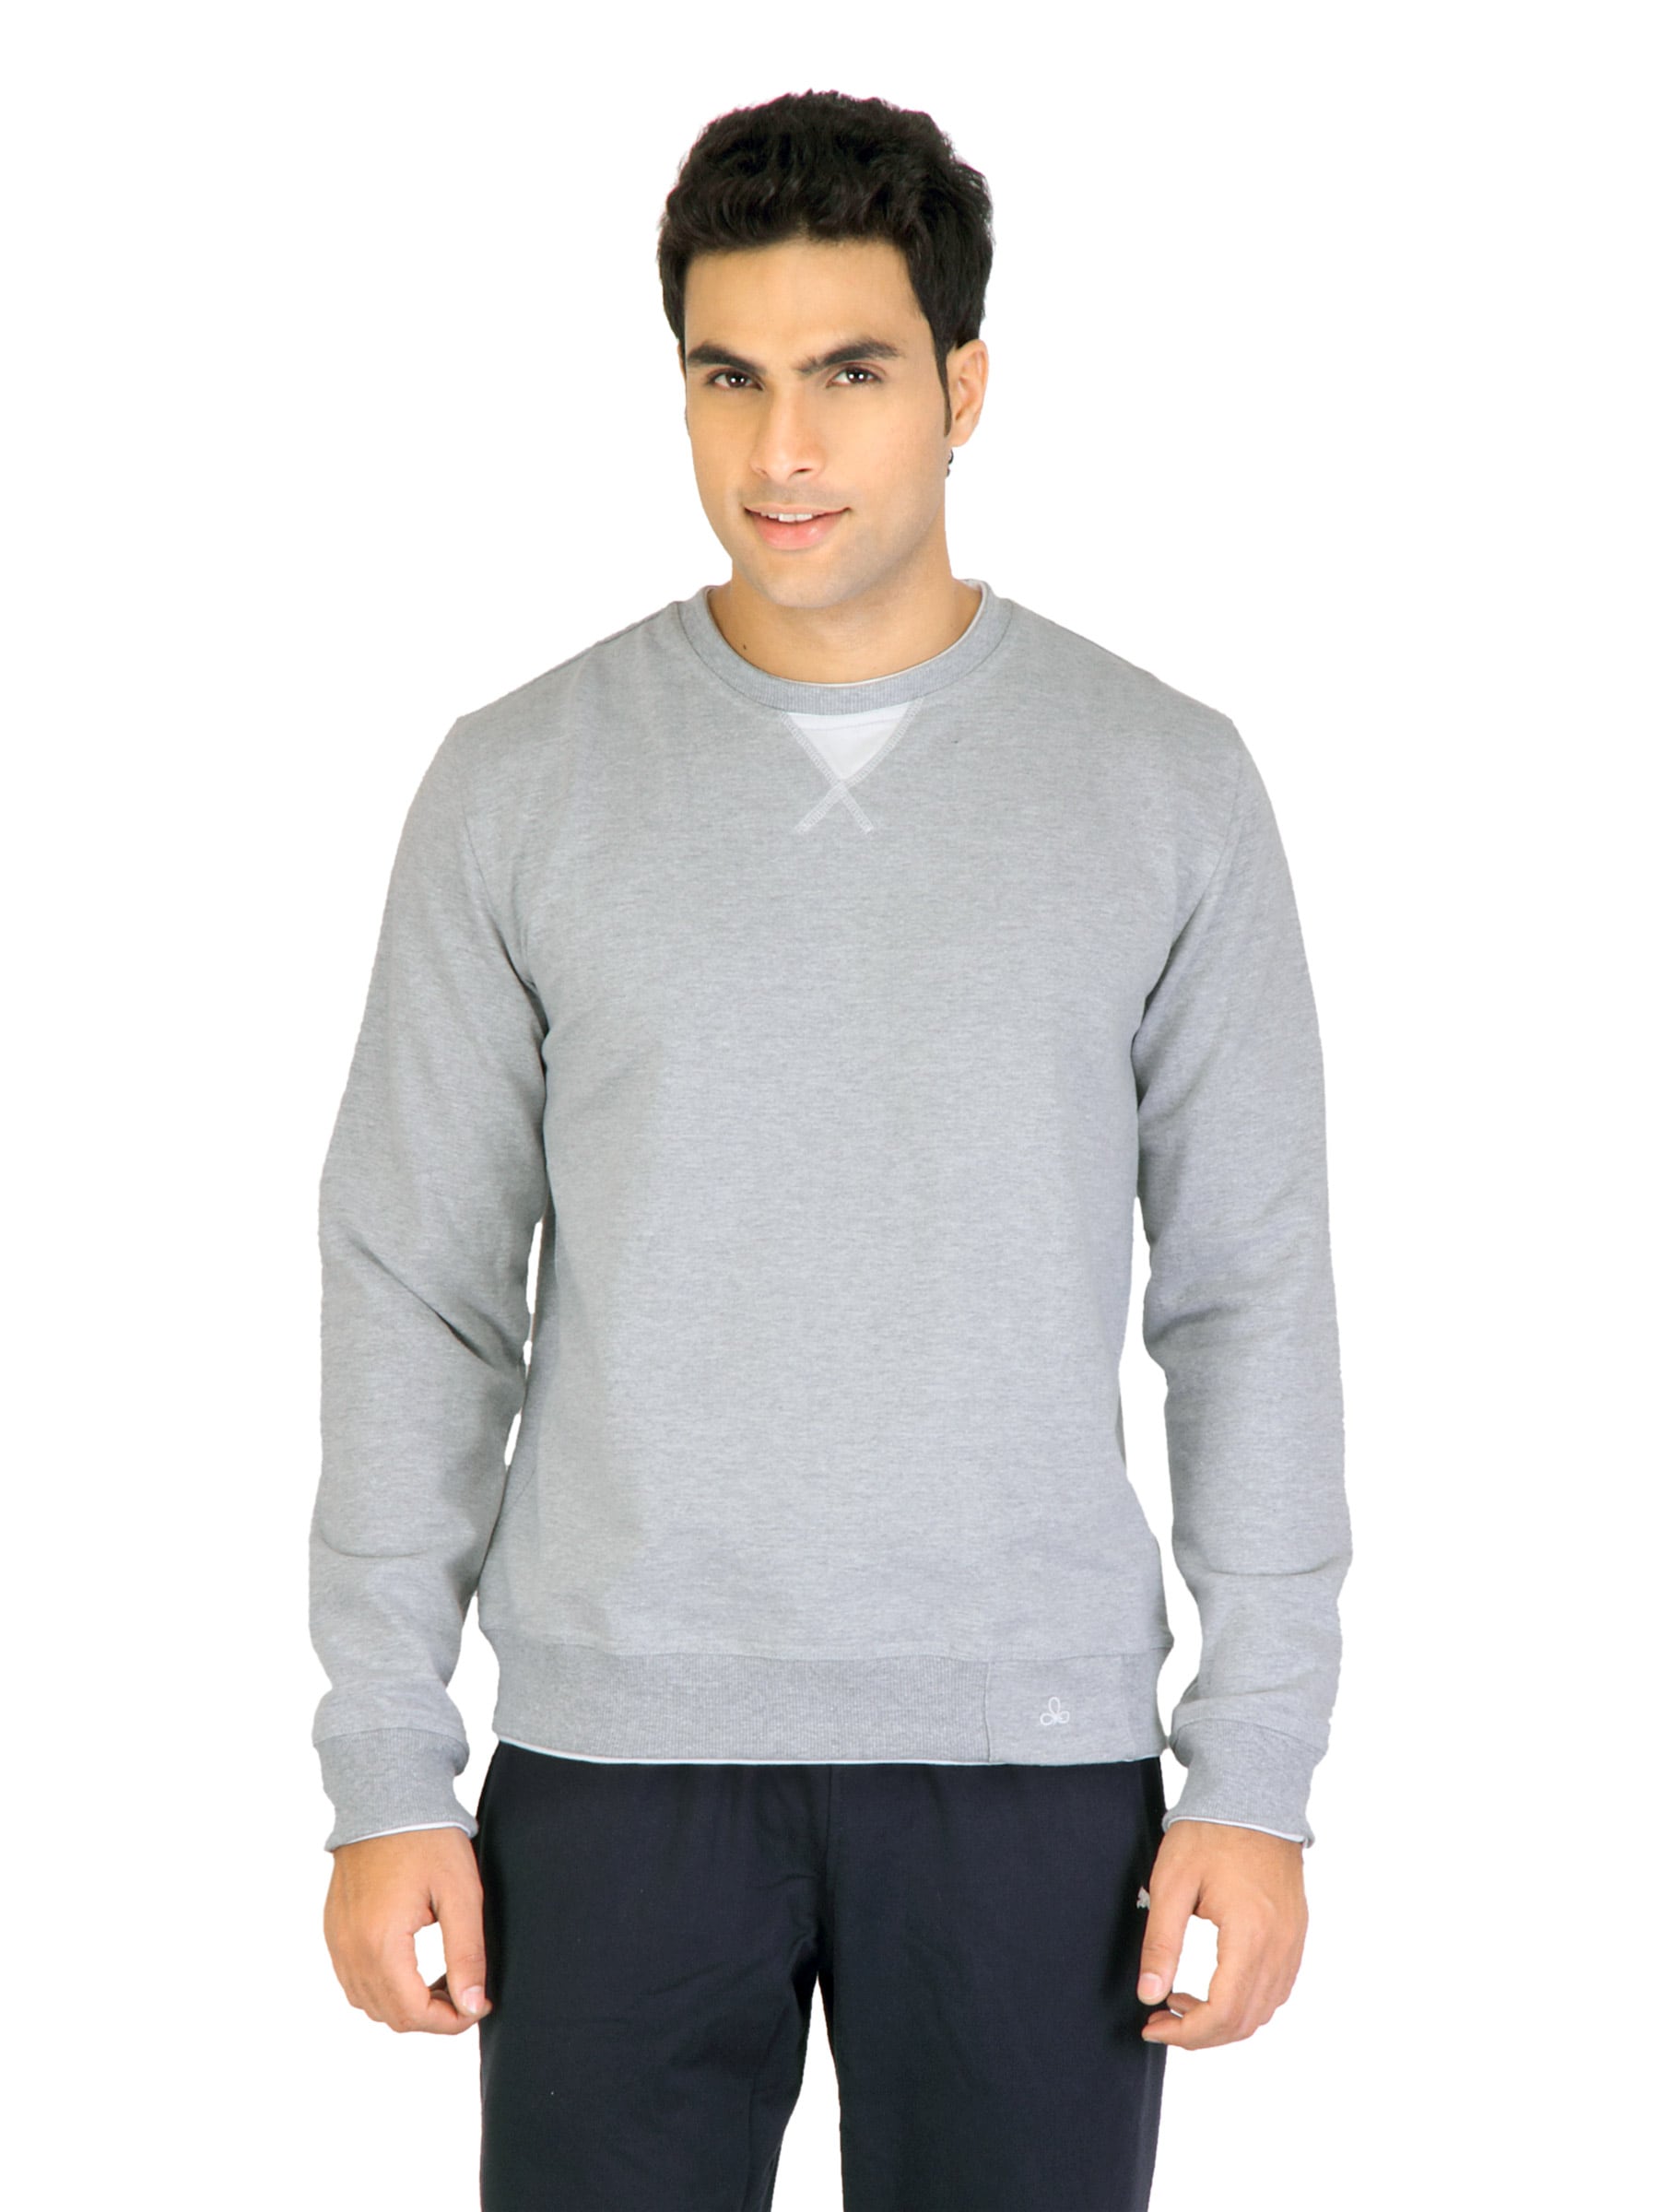 Urban Yoga Unisex Solid Grey Sweatshirts